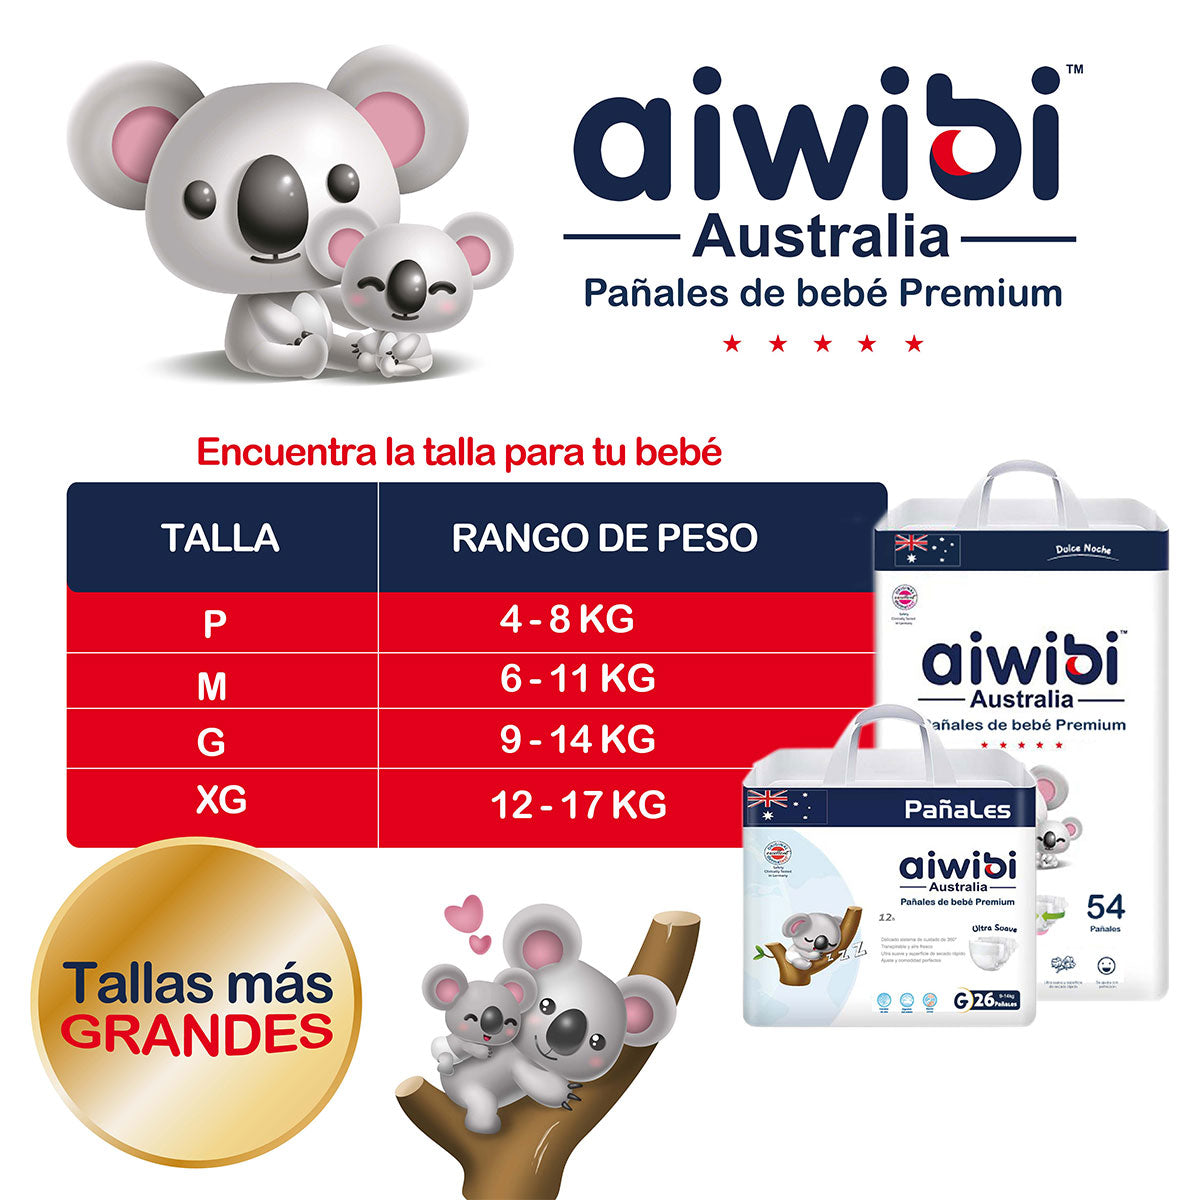 Pañales Aiwibi Premium Dulce Noche XG (42 unidades) - 🇦🇺 Producto Australiano